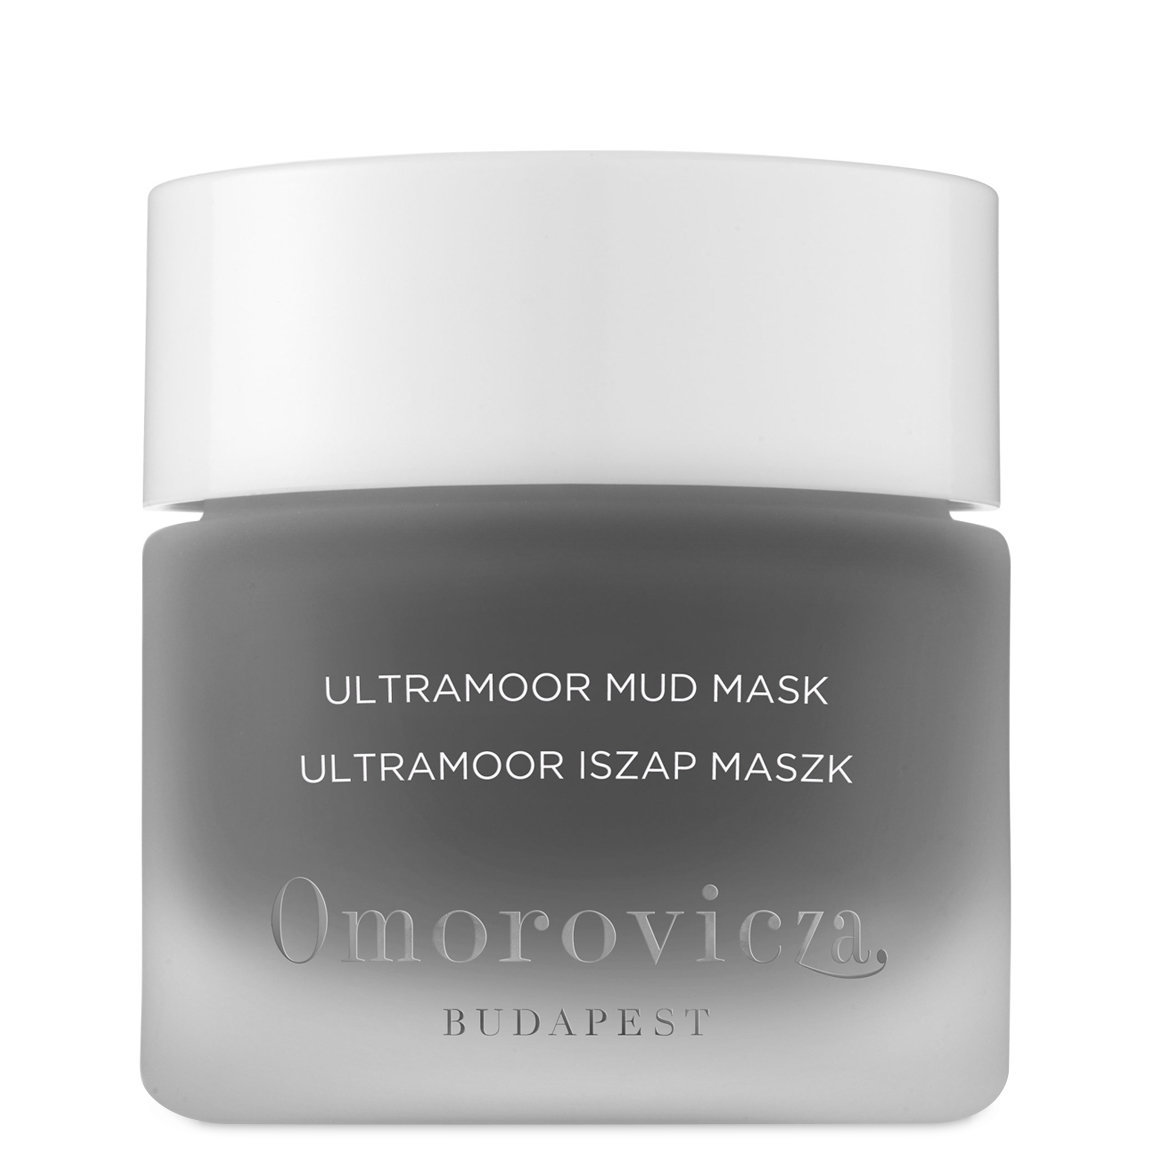 Omorovicza Ultramoor Mud Mask alternative view 1 - product swatch.